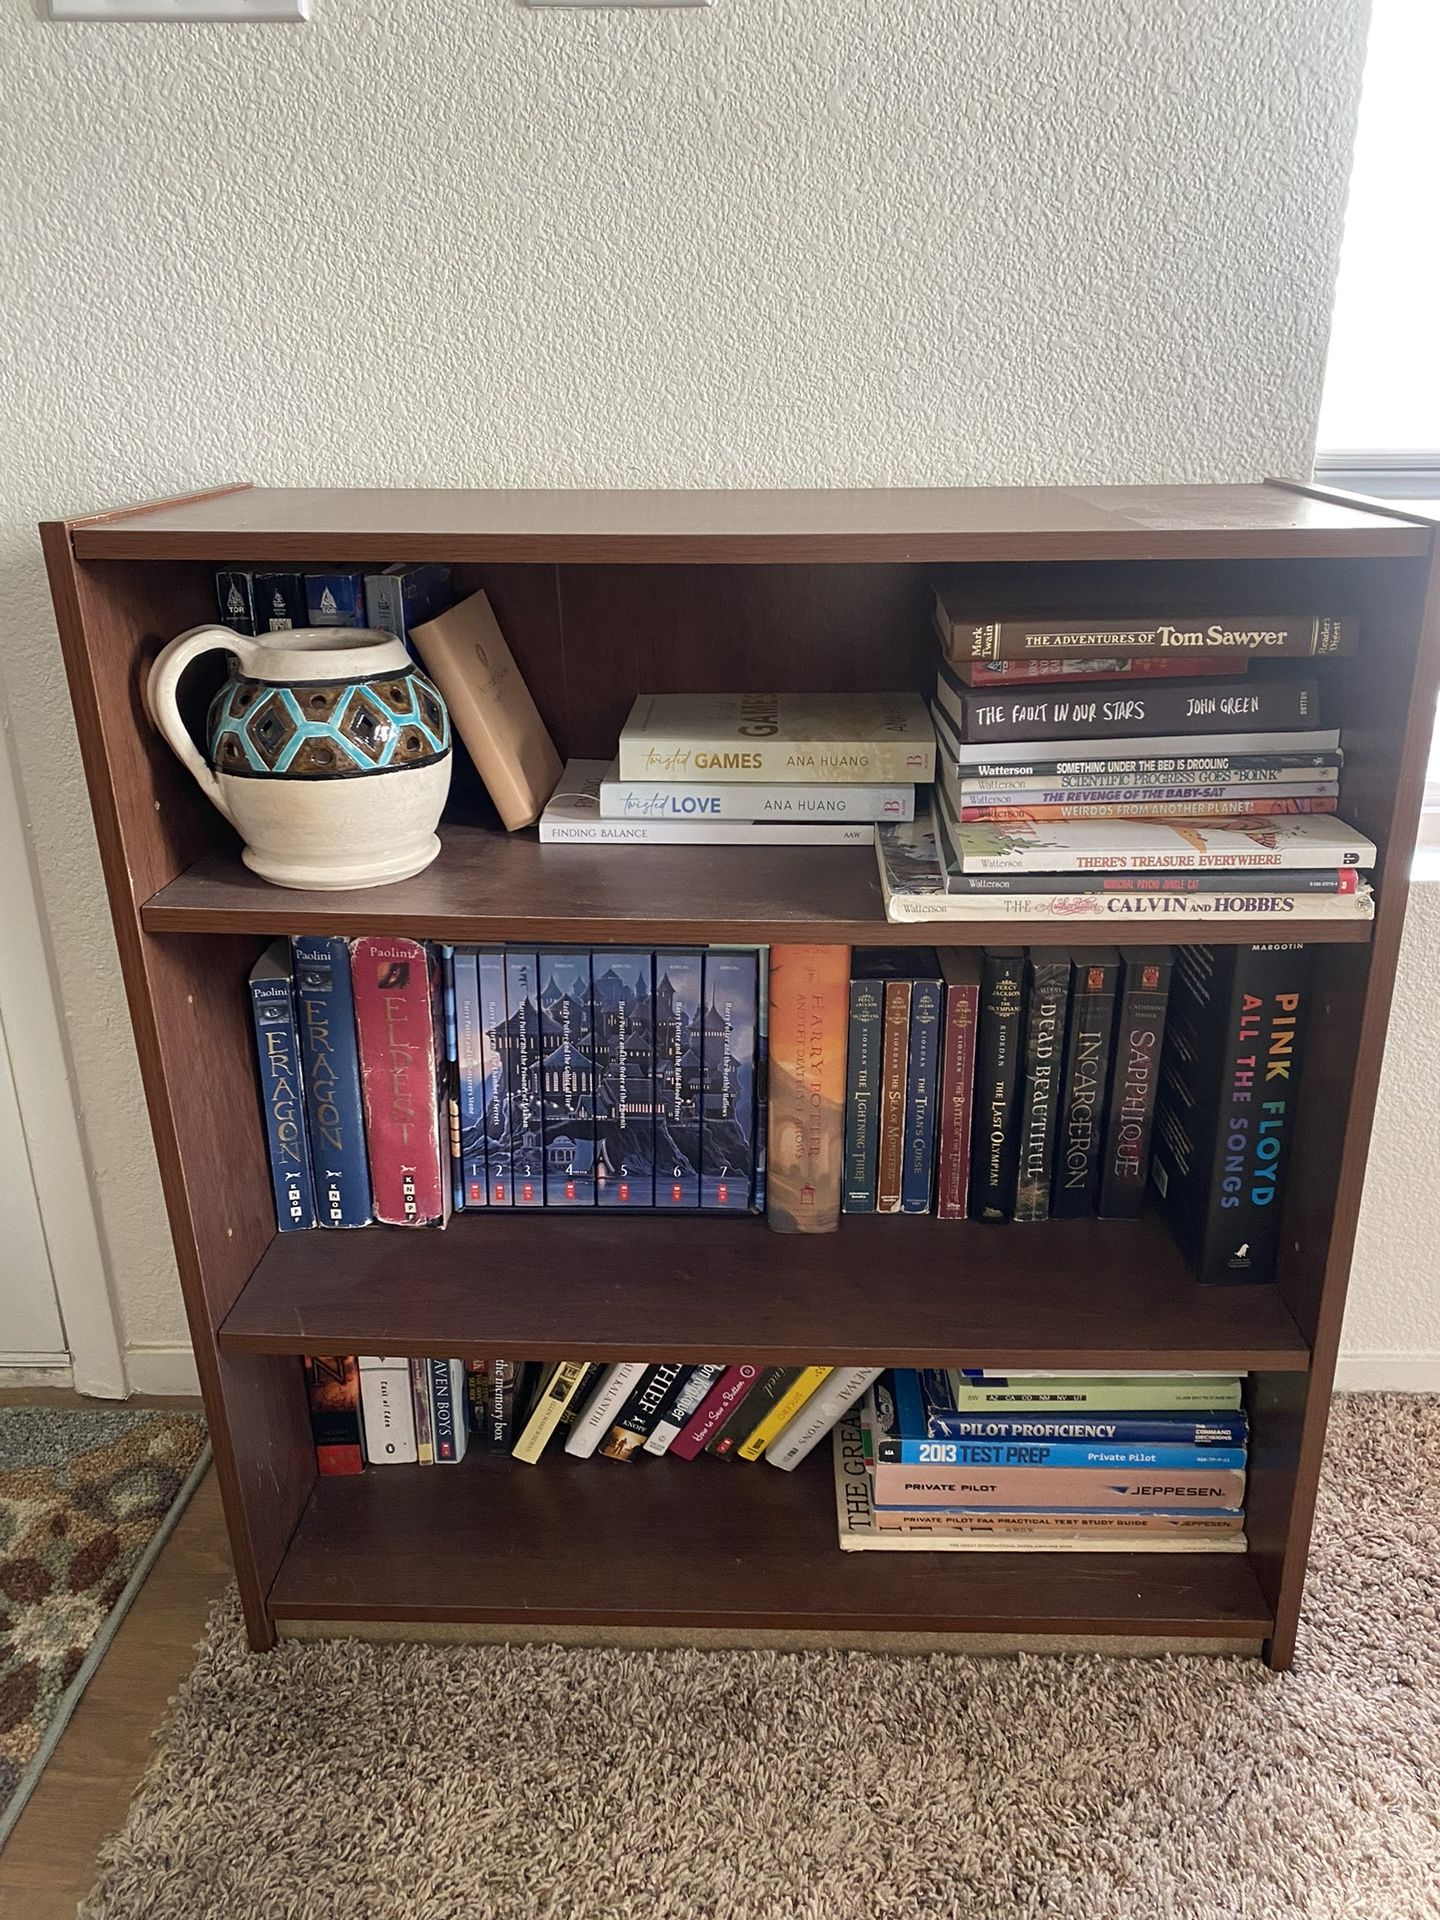 Small Brown Wooden Bookshelf Or Shelf